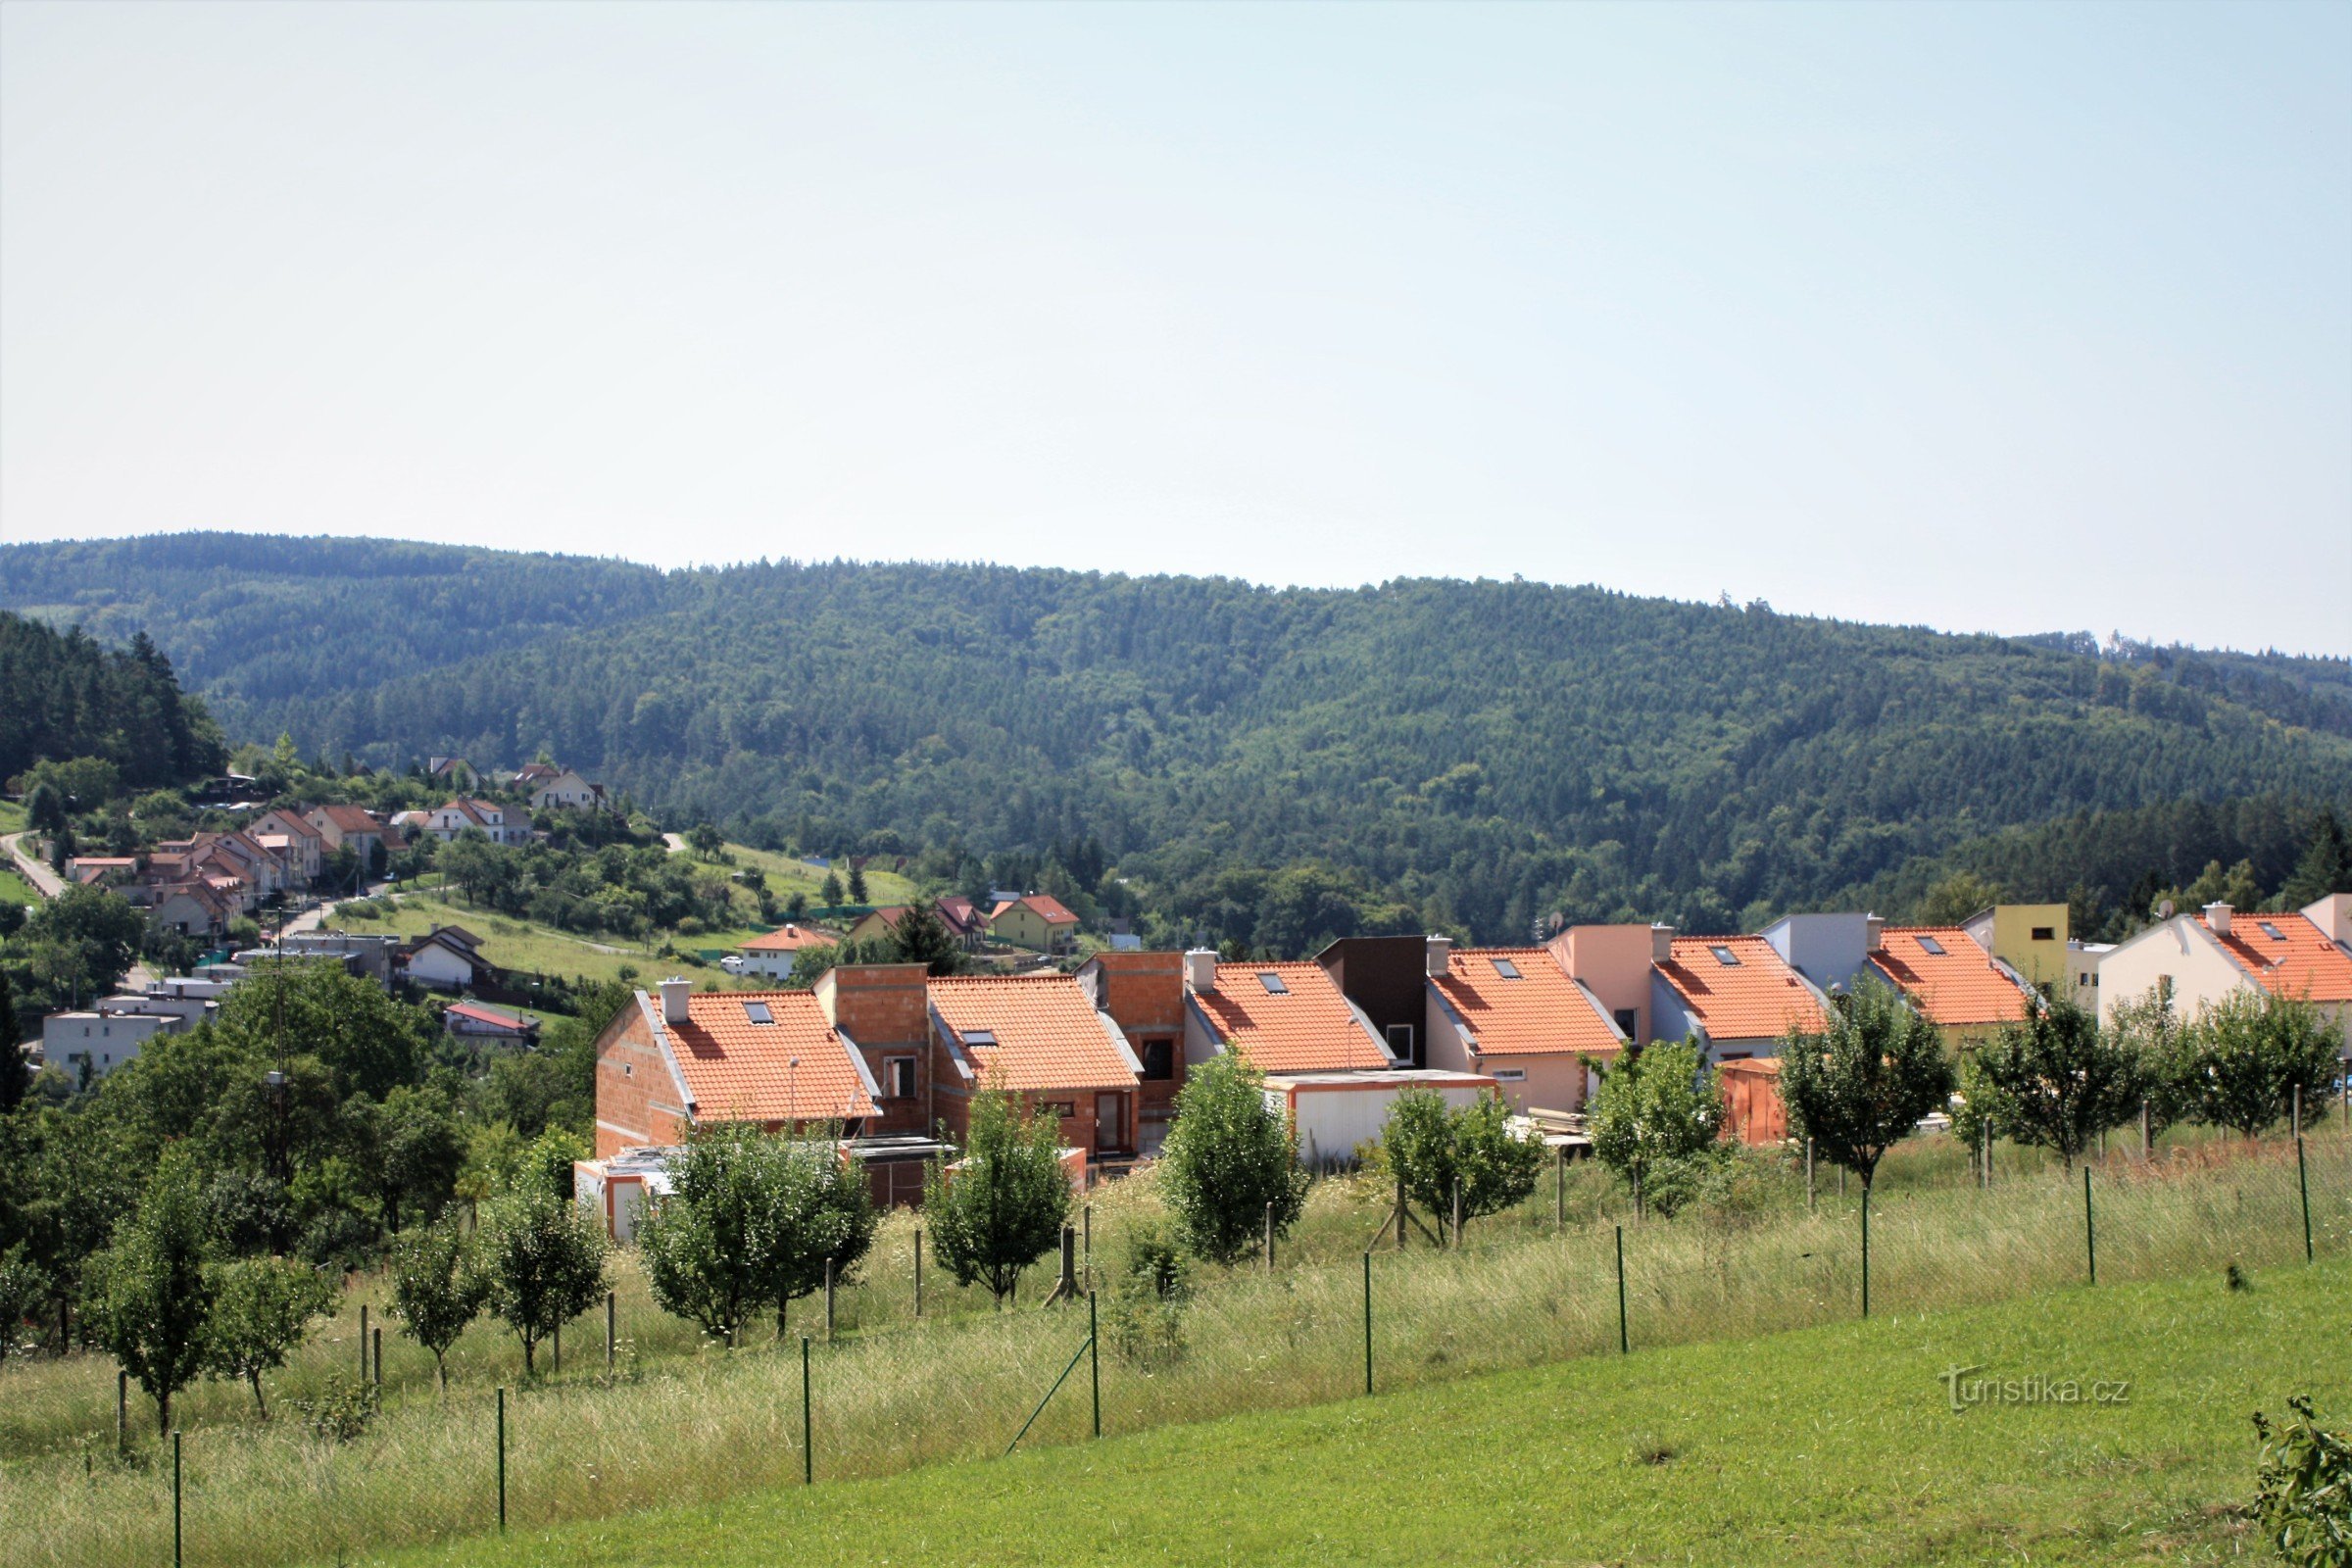 Kanice の新しい家々から Kanické potok と Časnýra の合流点までの眺め